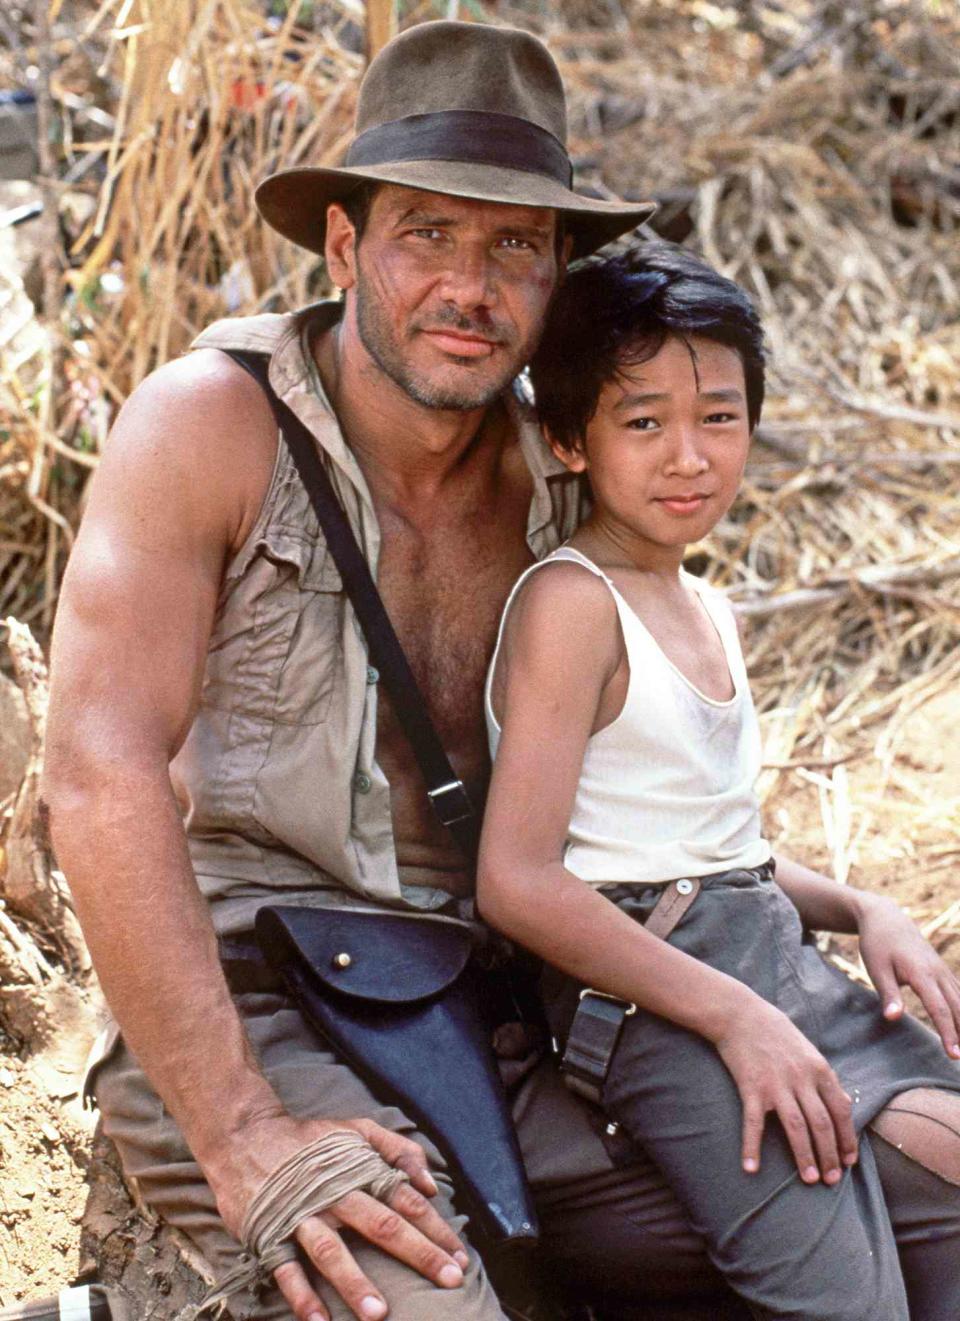 Ke Huy Quan Looks Back on Indiana Jones and Tough Times as a Former Kid